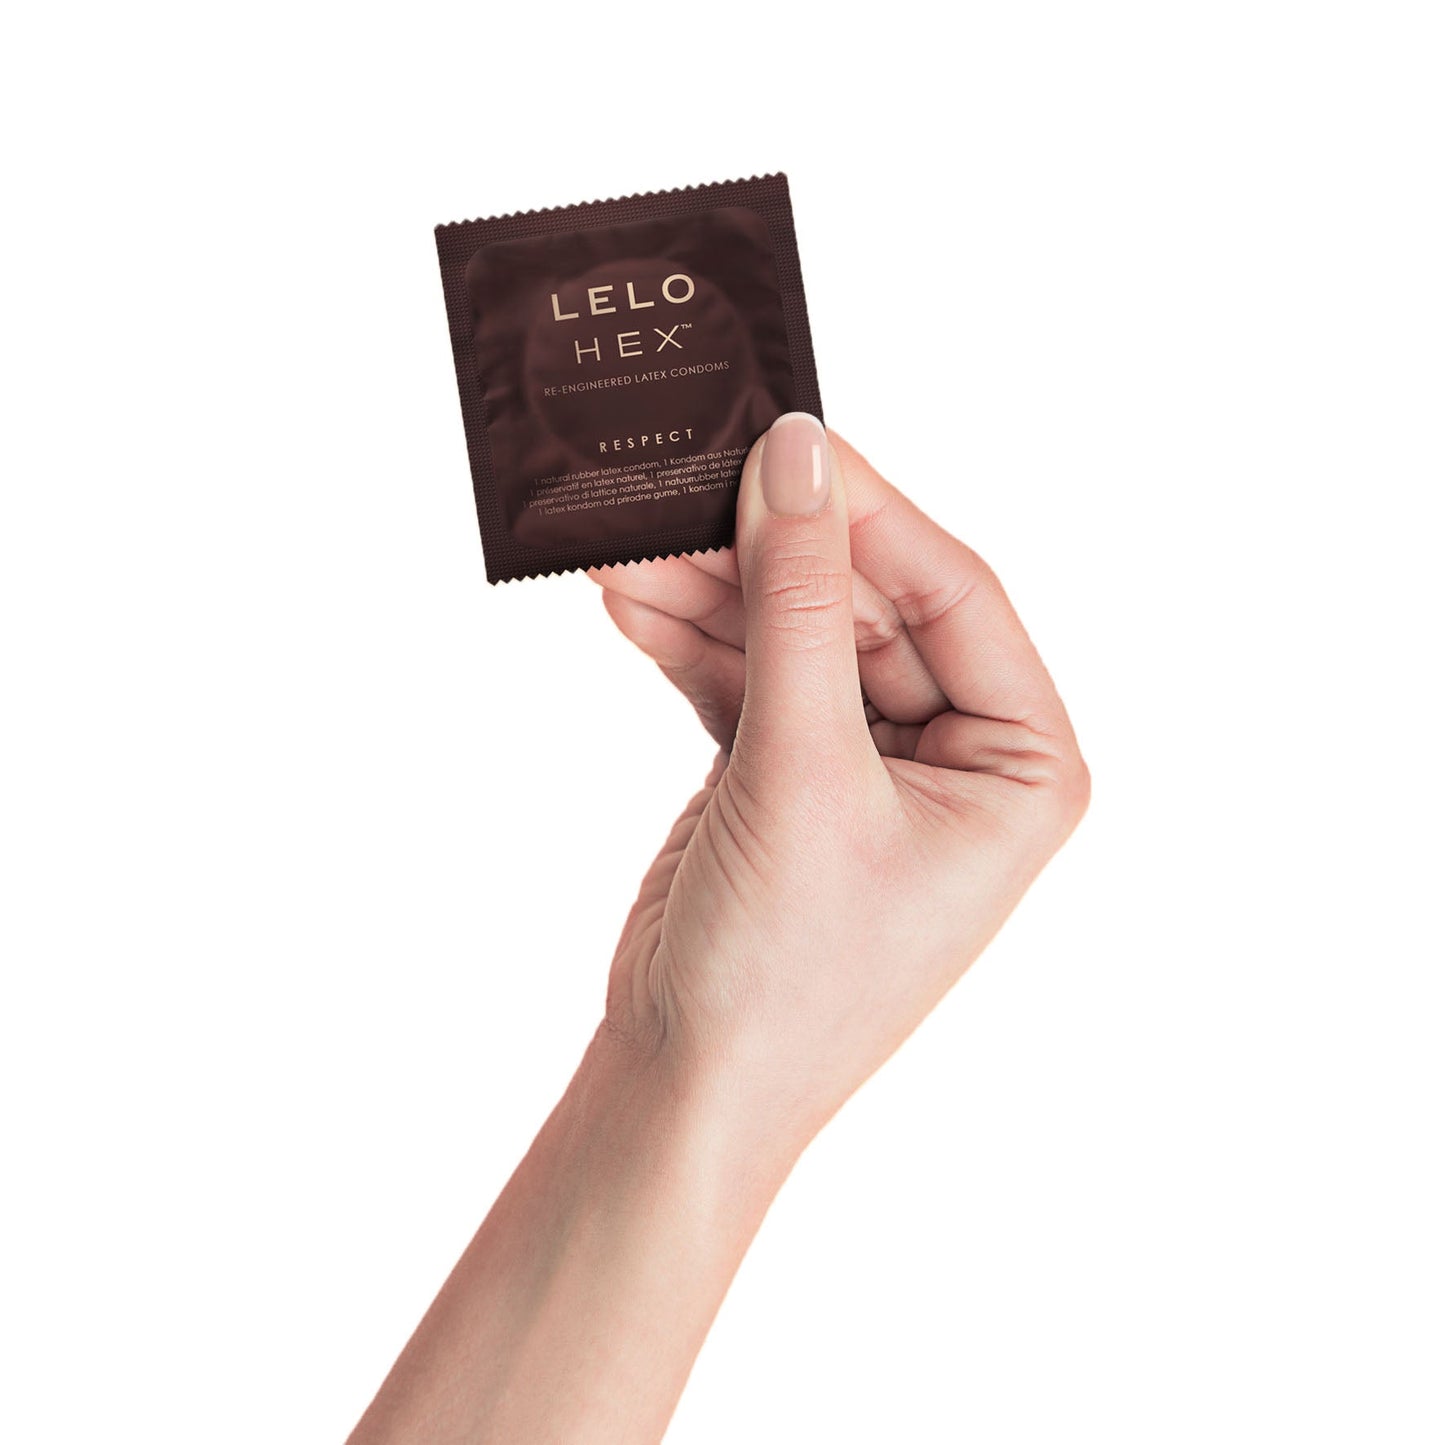 LELO HEX Respect XL Condoms, 12 Pack